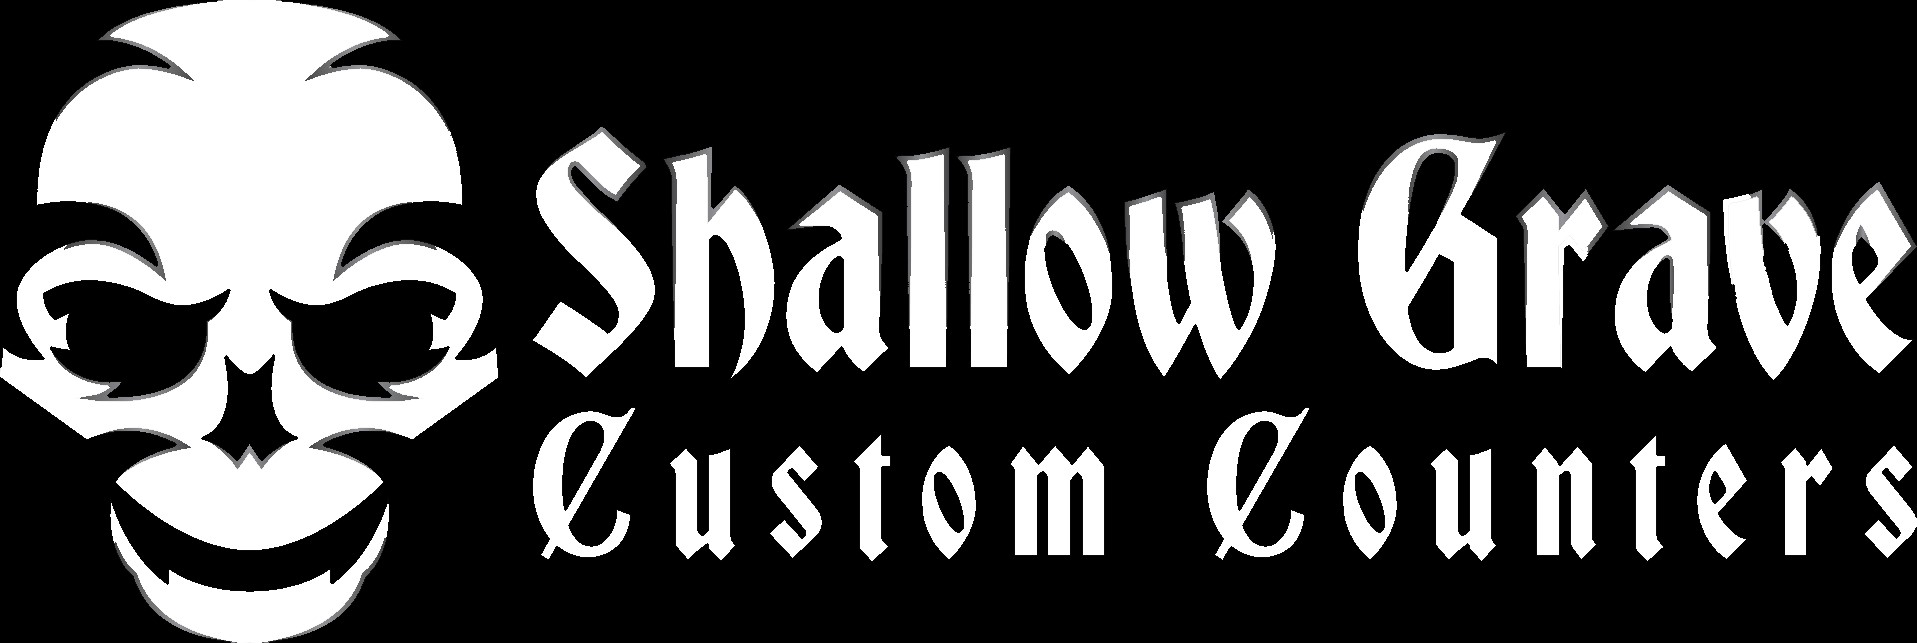 Shallow Grave Custom Counters logo